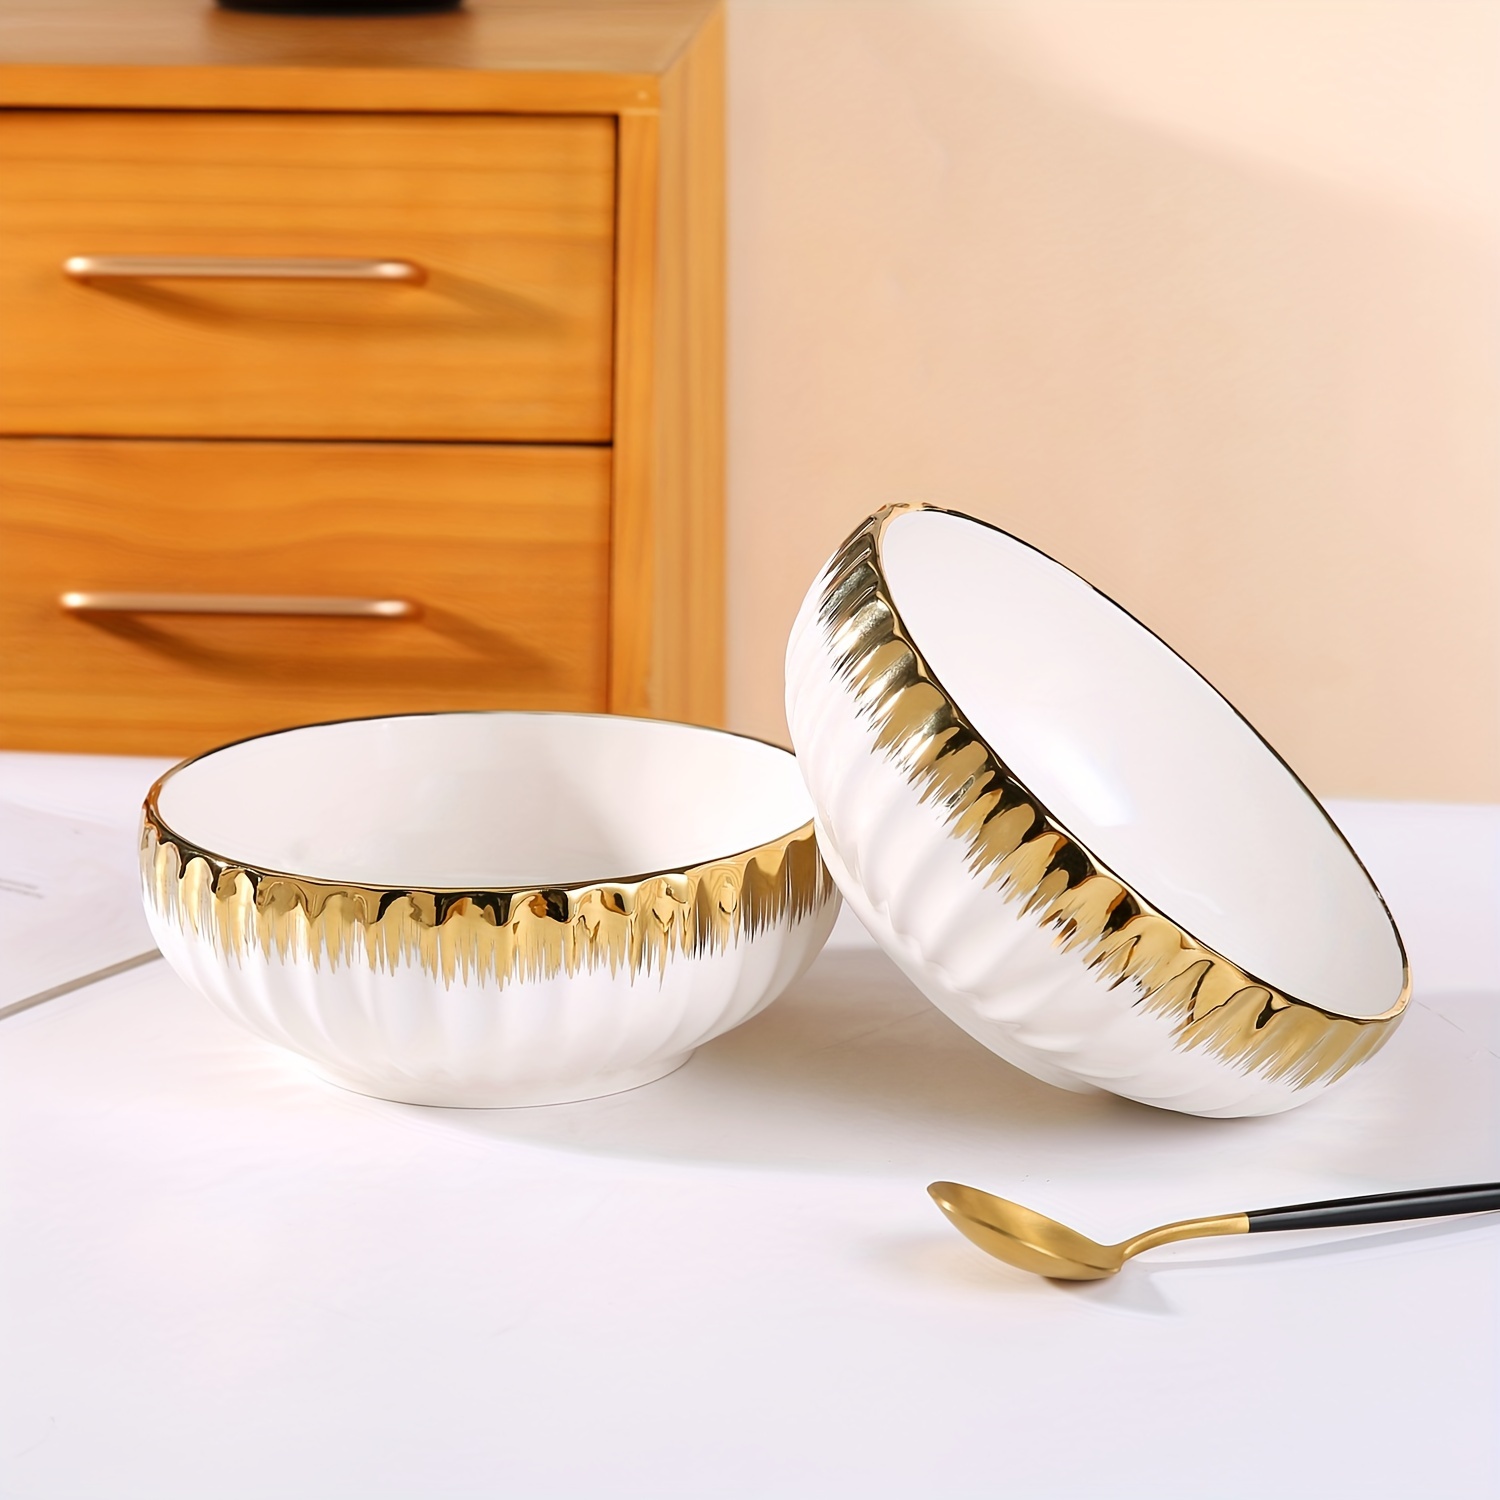 

2pcs Luxurious Gold-edged Ceramic Pasta Bowls Set, Large 1200ml/42oz Salad Fruit Serving Bowls, Lead-free Round Kitchen Dinnerware For Noodles, Salad, Fruits - Dishwasher Safe